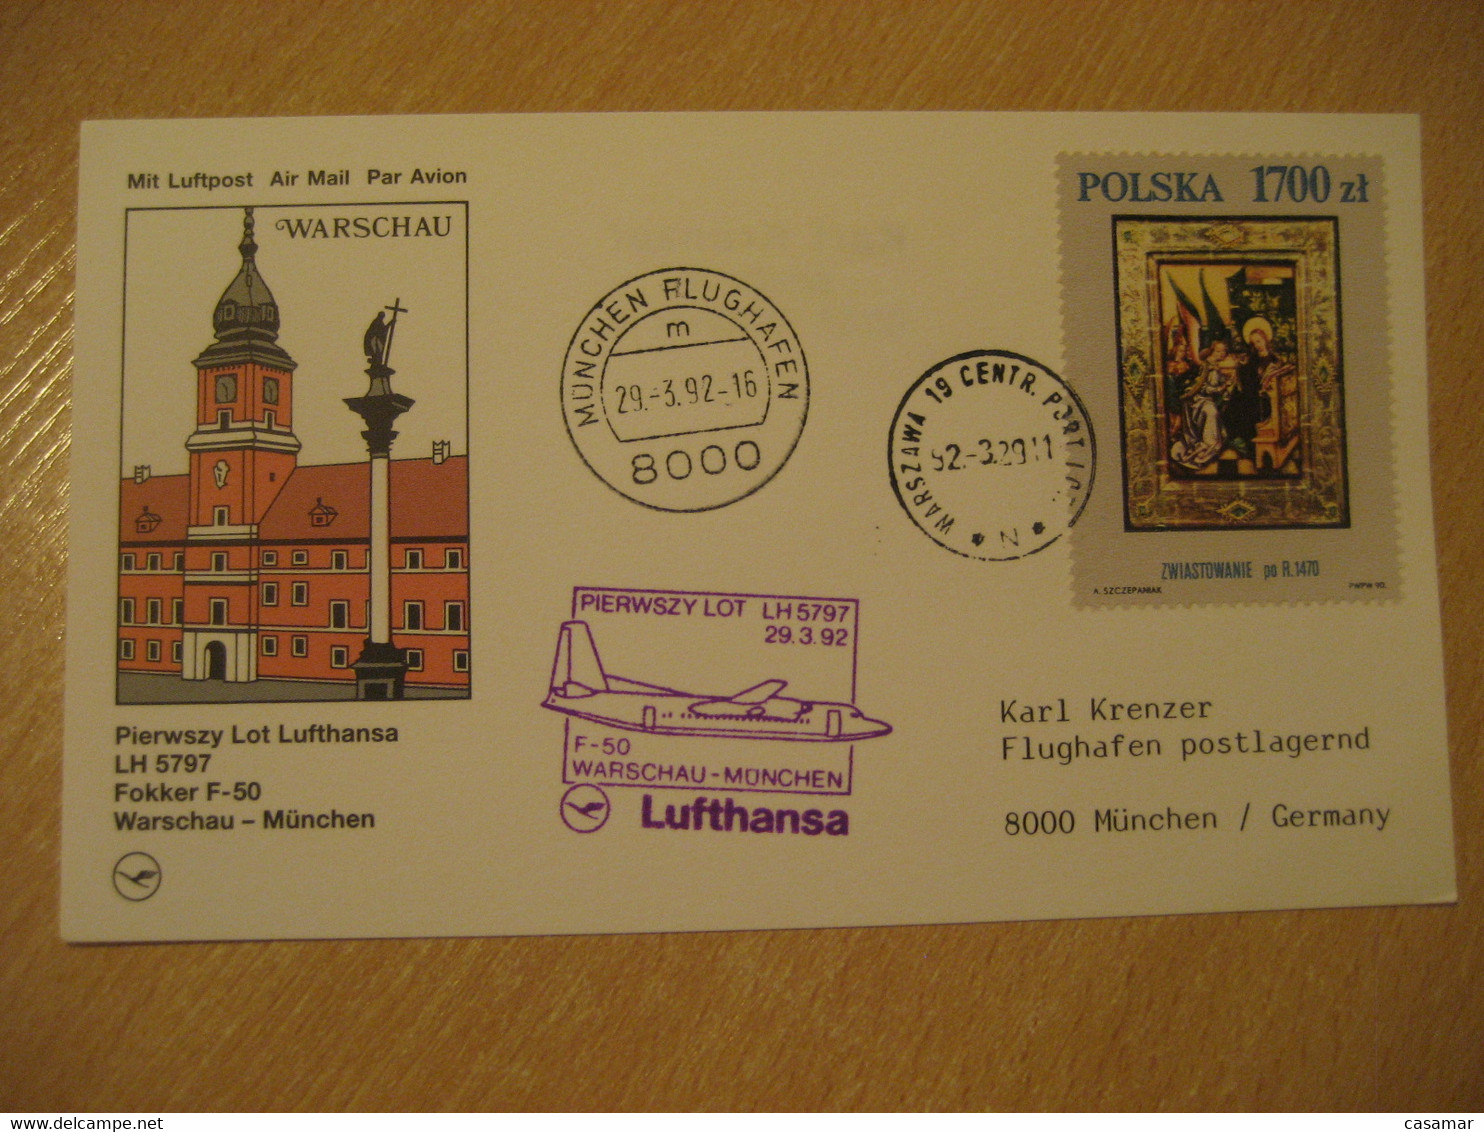 WARSZAWA Warsaw Munich 1992 Lufthansa Airlines Airline Fokker F-50 First Flight Violet Cancel Card POLAND GERMANY - Posta Aerea